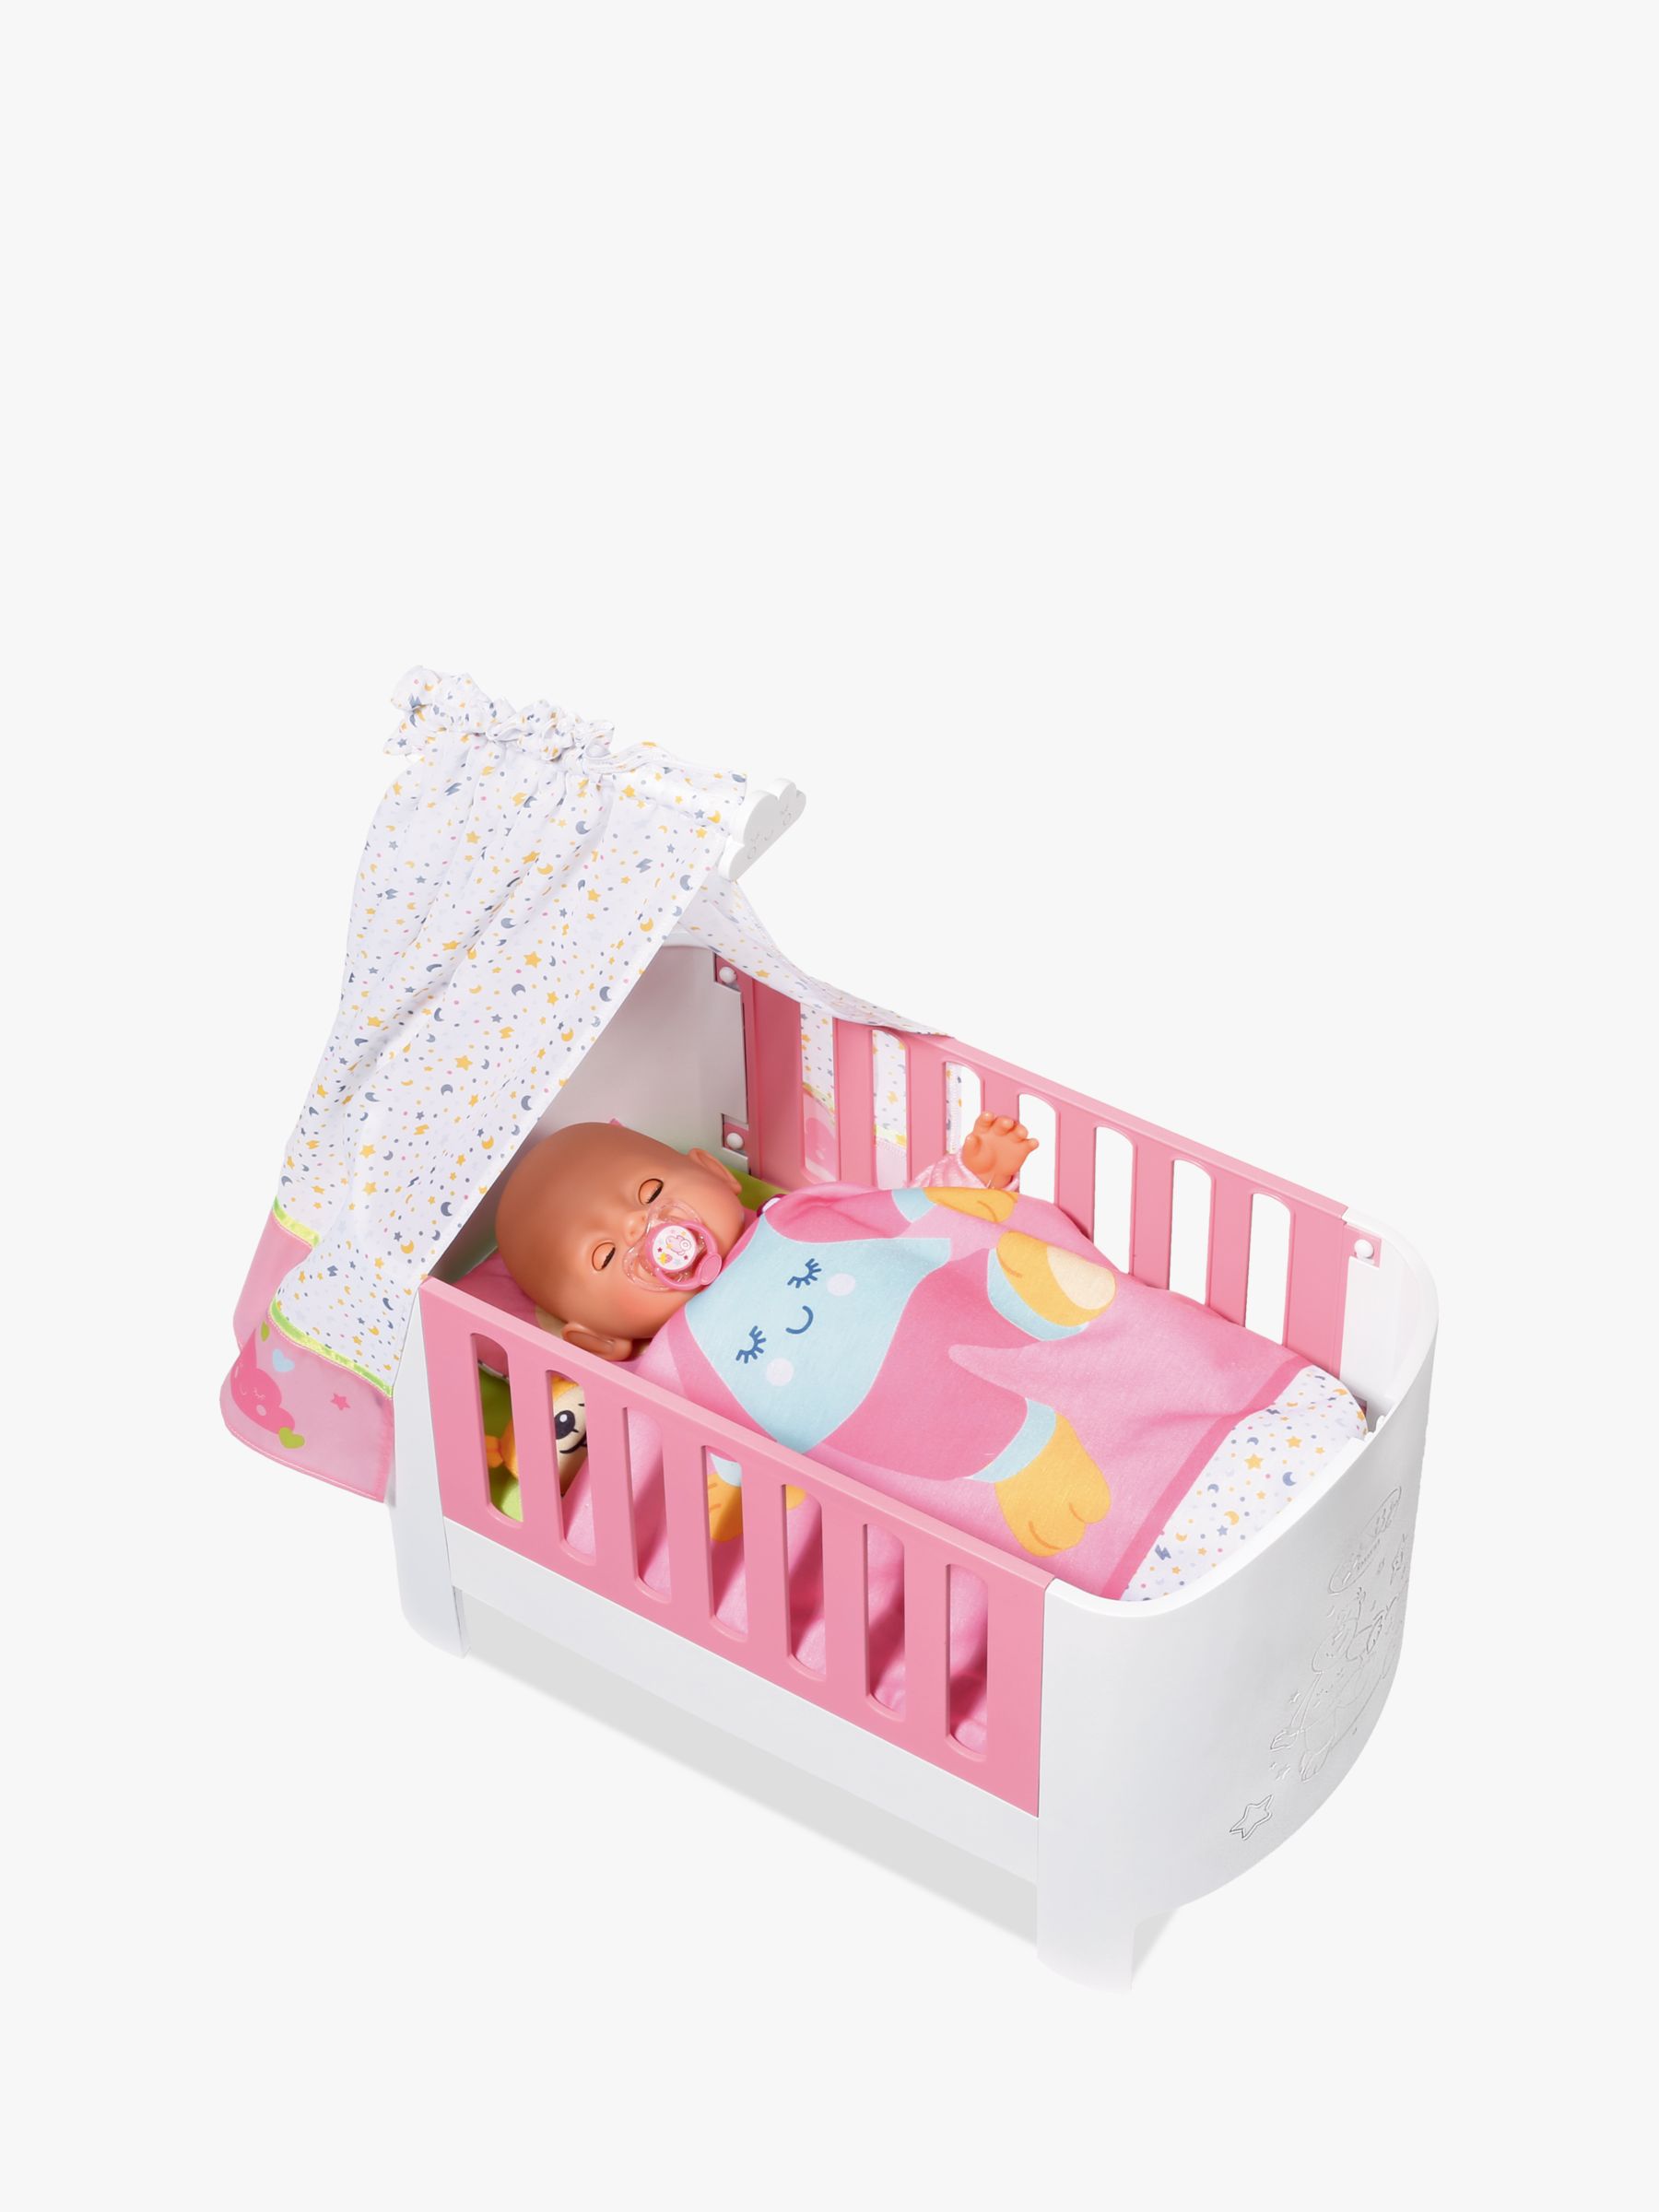 baby born magic bed